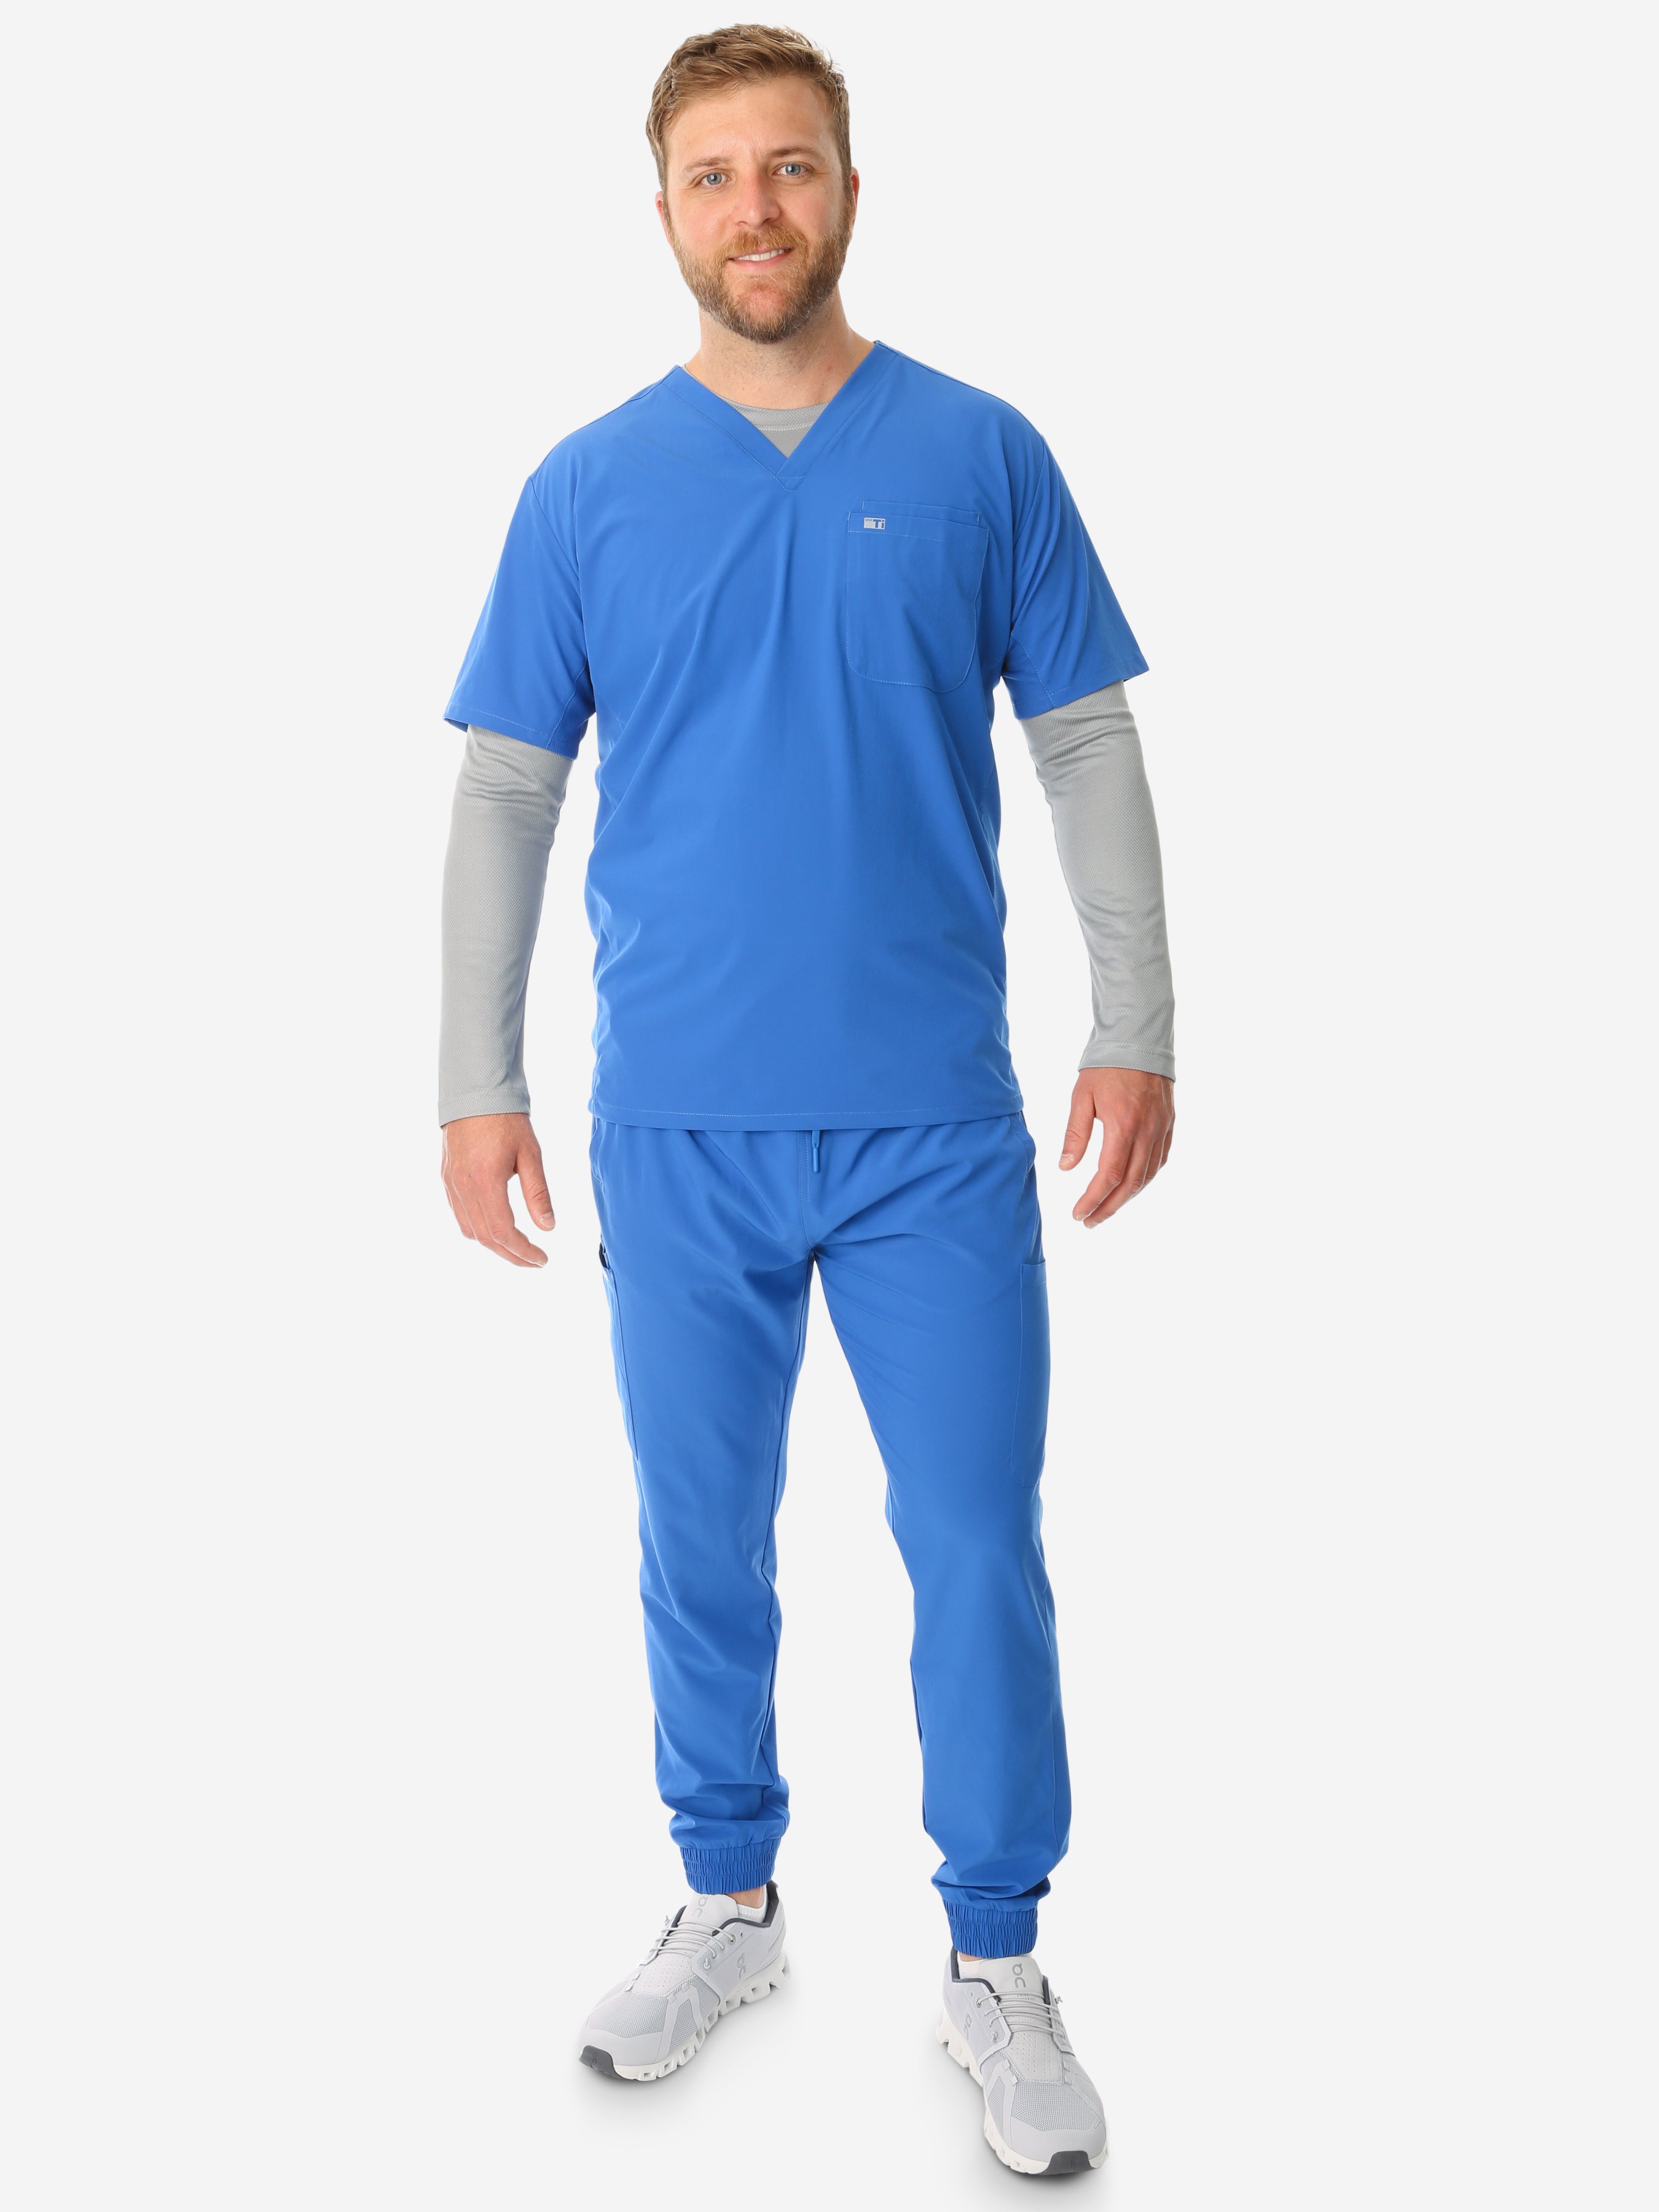 TiScrubs Men's Stretch Royal Blue Double-Pocket Scrub Top and Jogger Pants Full Body Front with Titanium Gray Underscrub